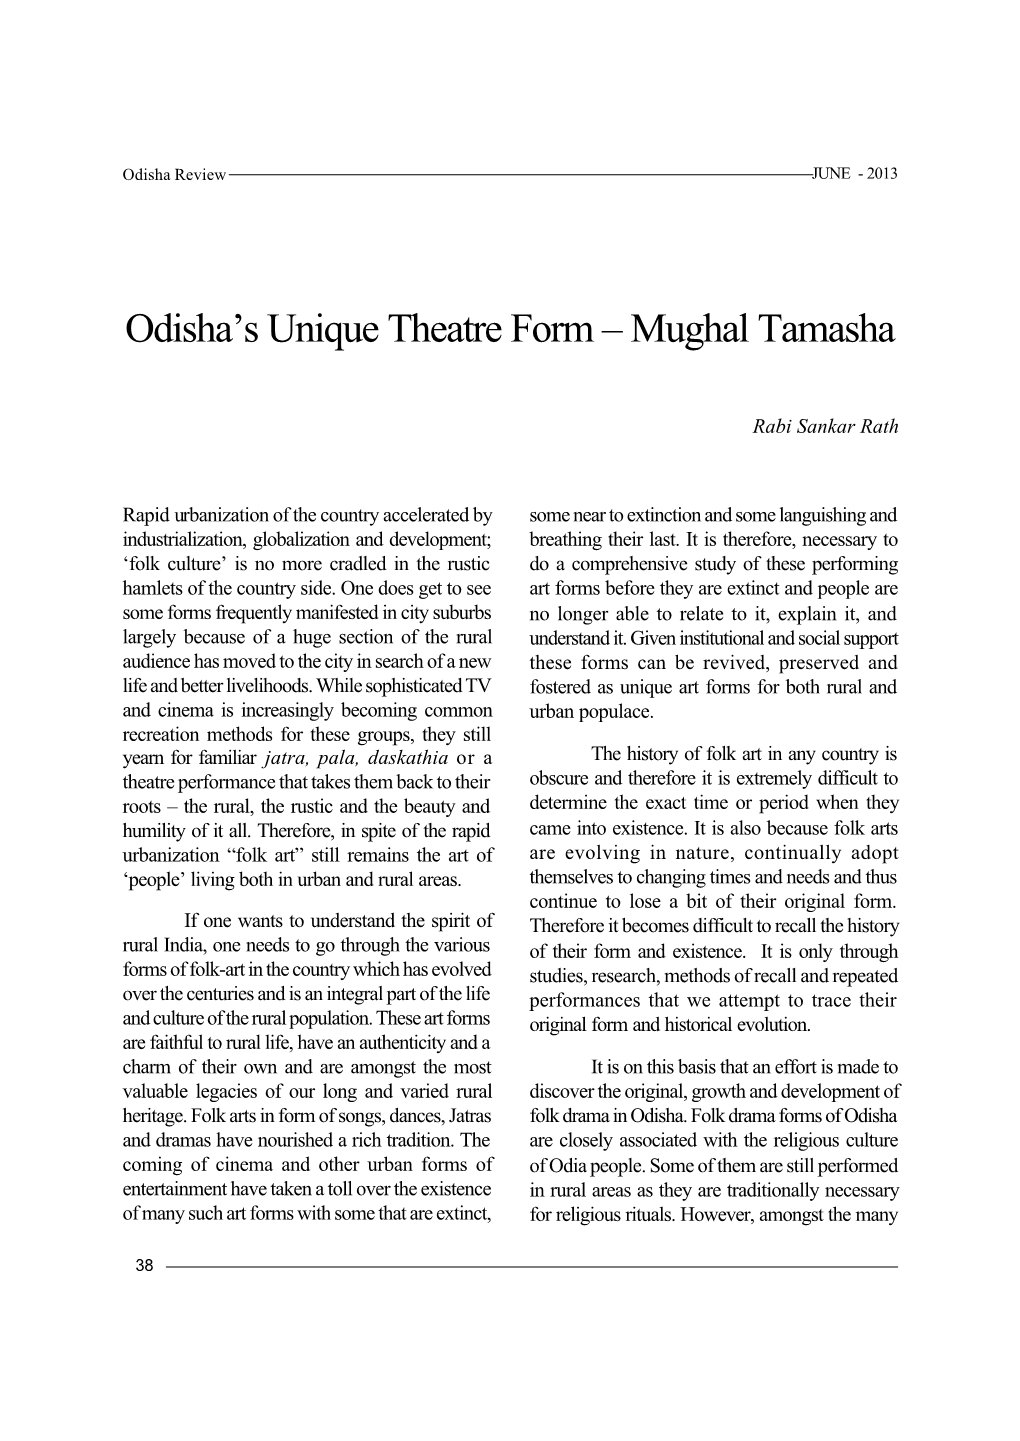 Odisha's Unique Theatre Form – Mughal Tamasha